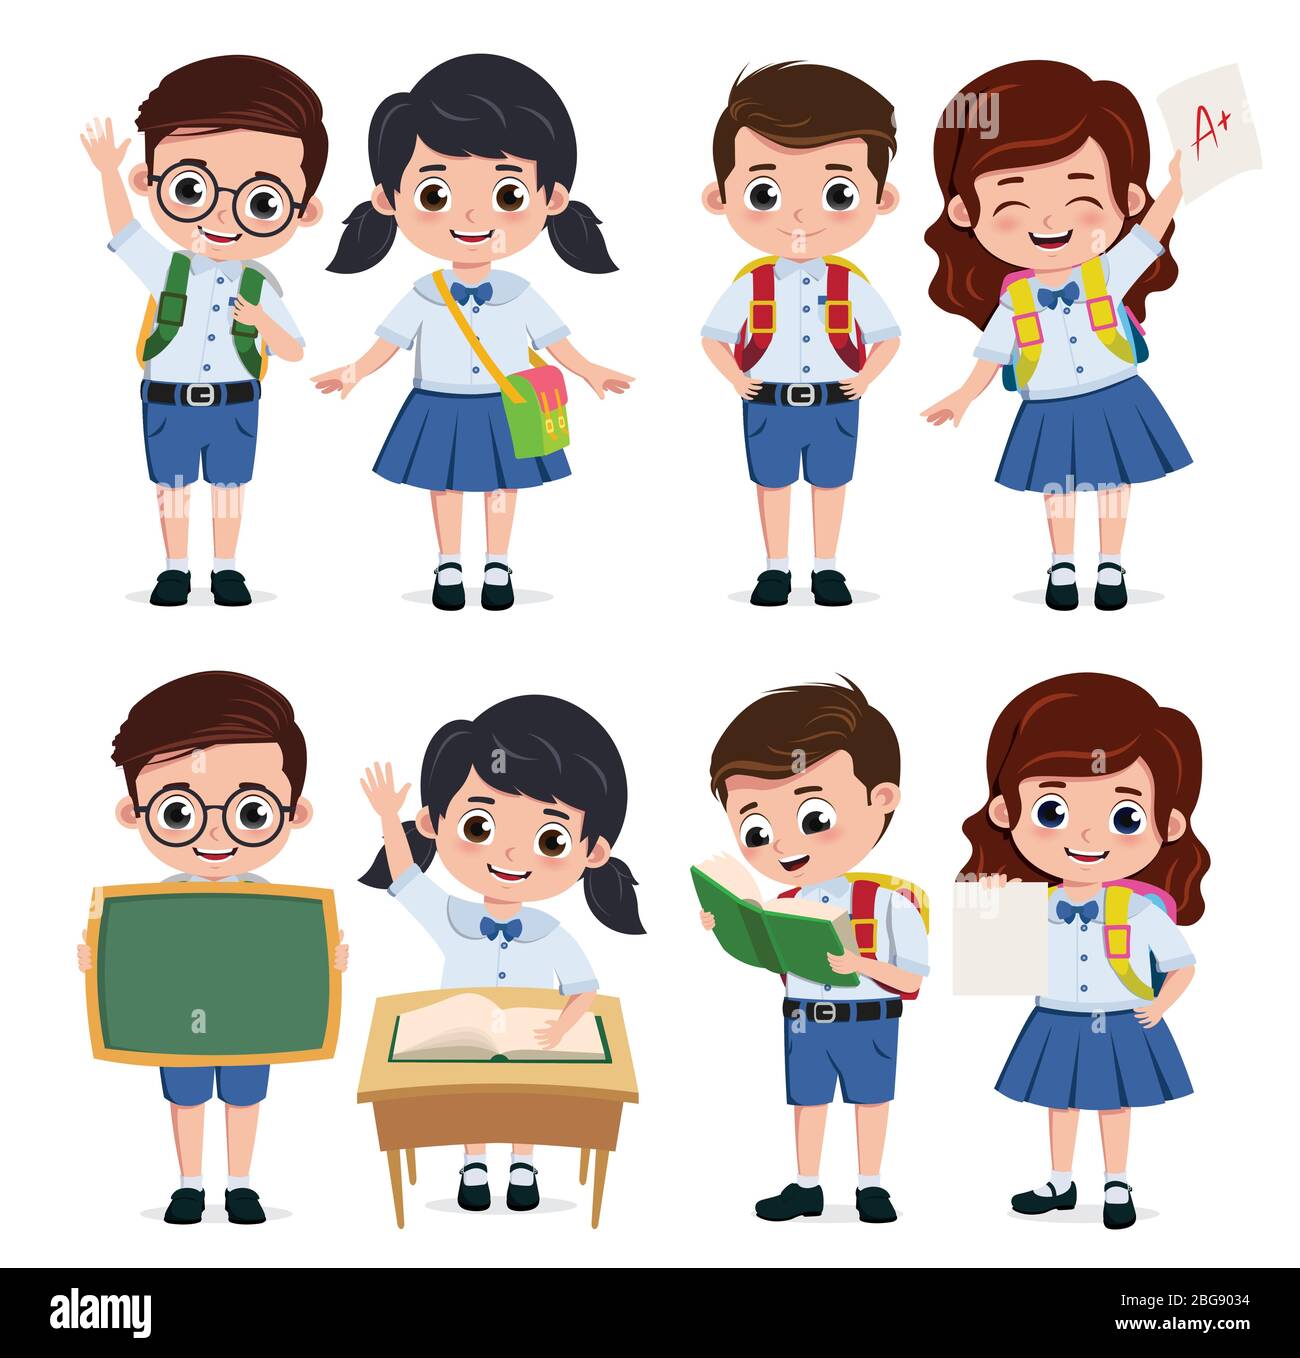 School classmate students character vector set. Back to school classmates kids elementary characters wearing uniform doing educational actives. Stock Vector